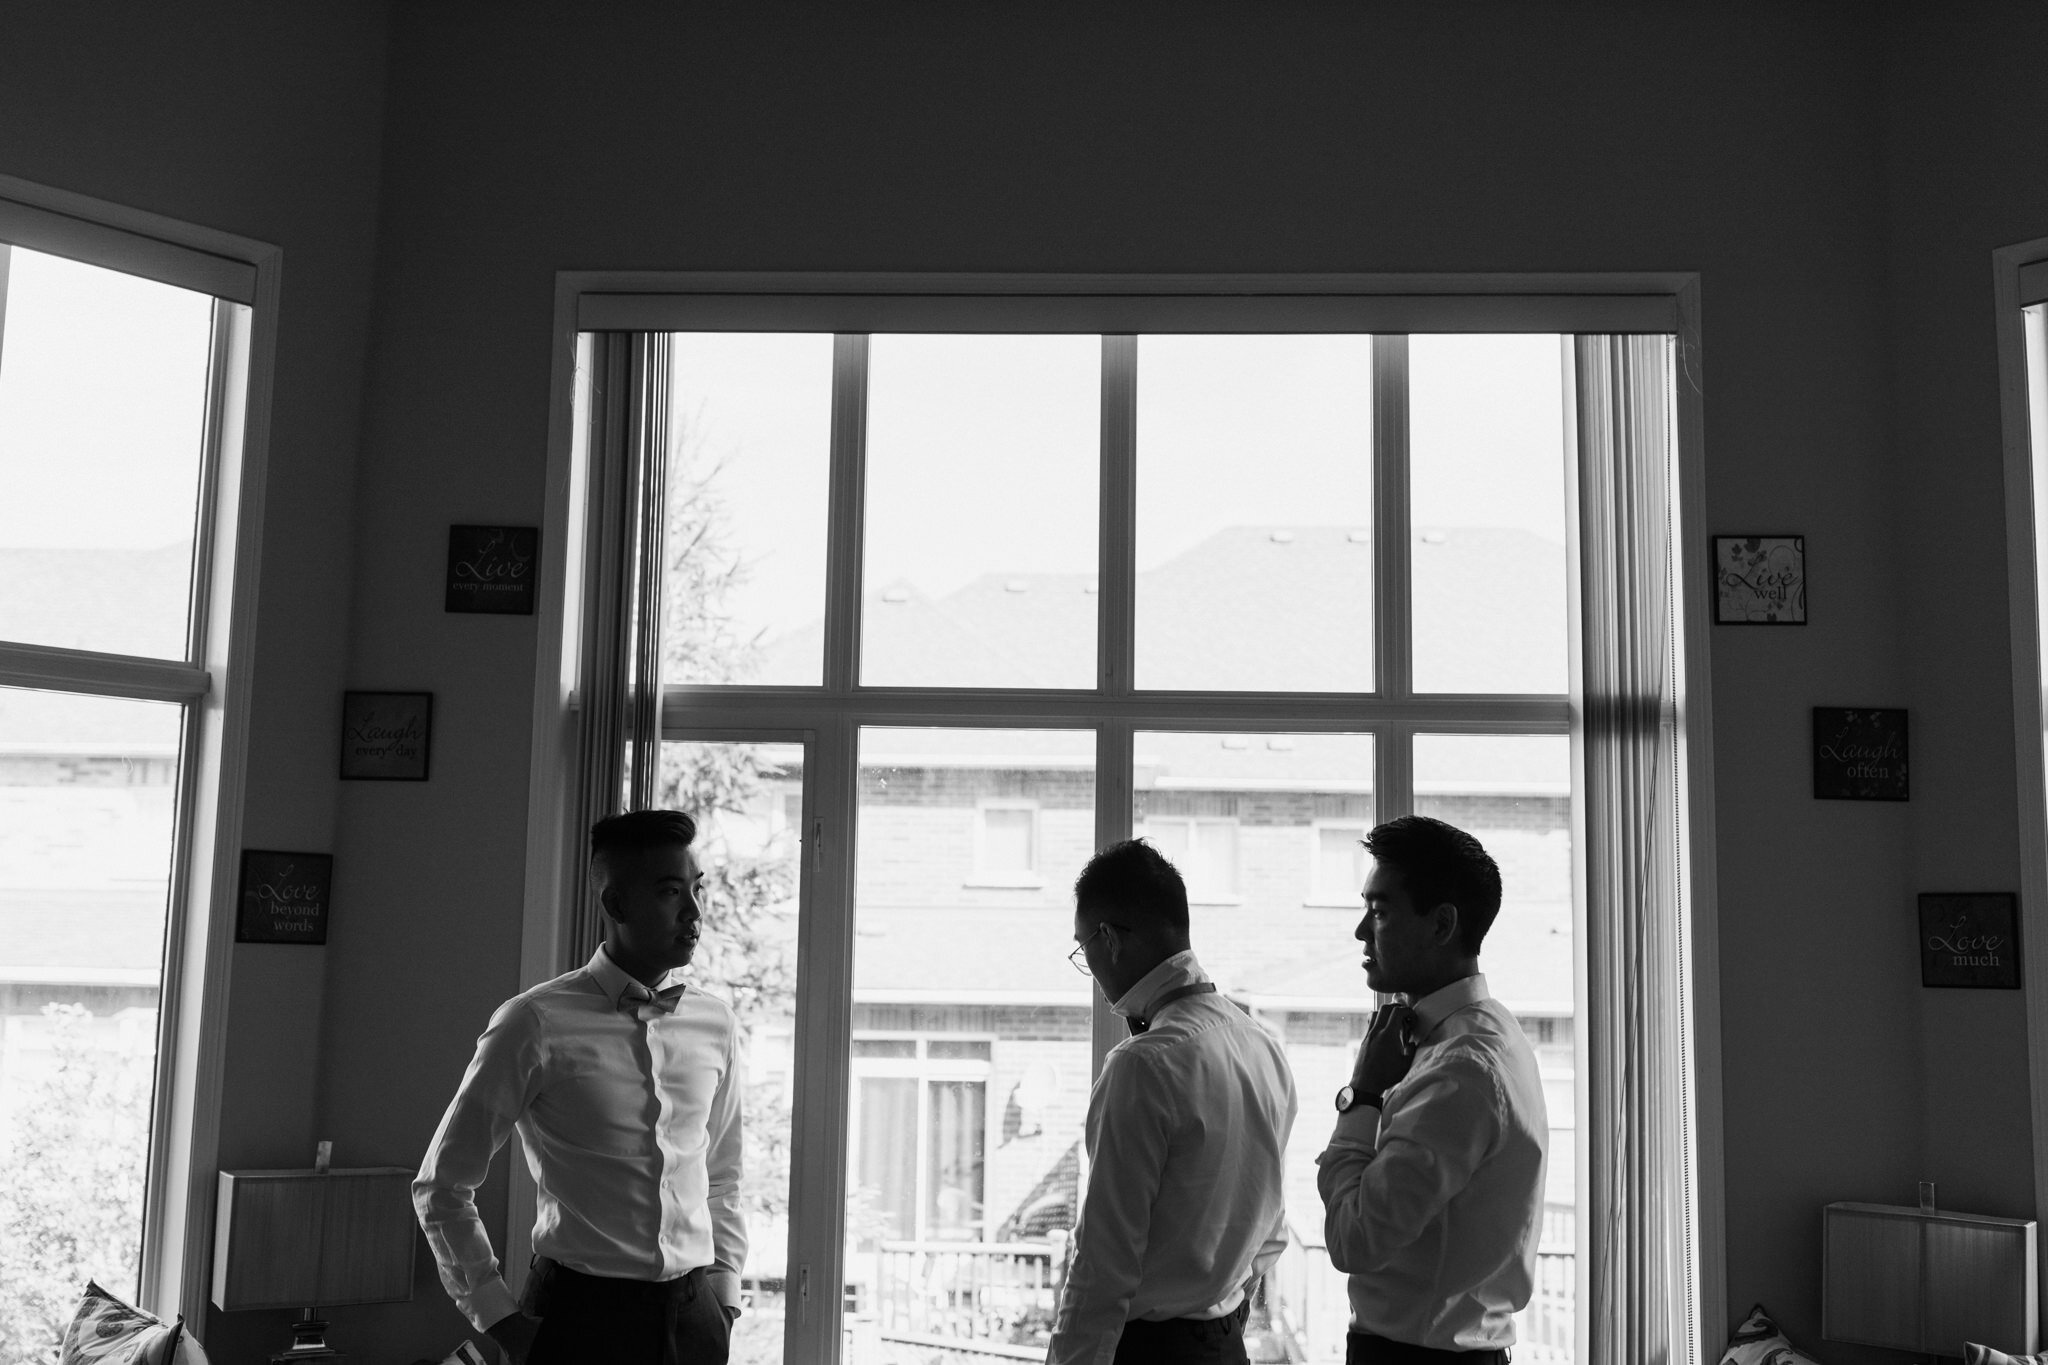 190-groom-getting-ready-photos-toronto-brewery-wedding-photos-steamwhistle.jpg